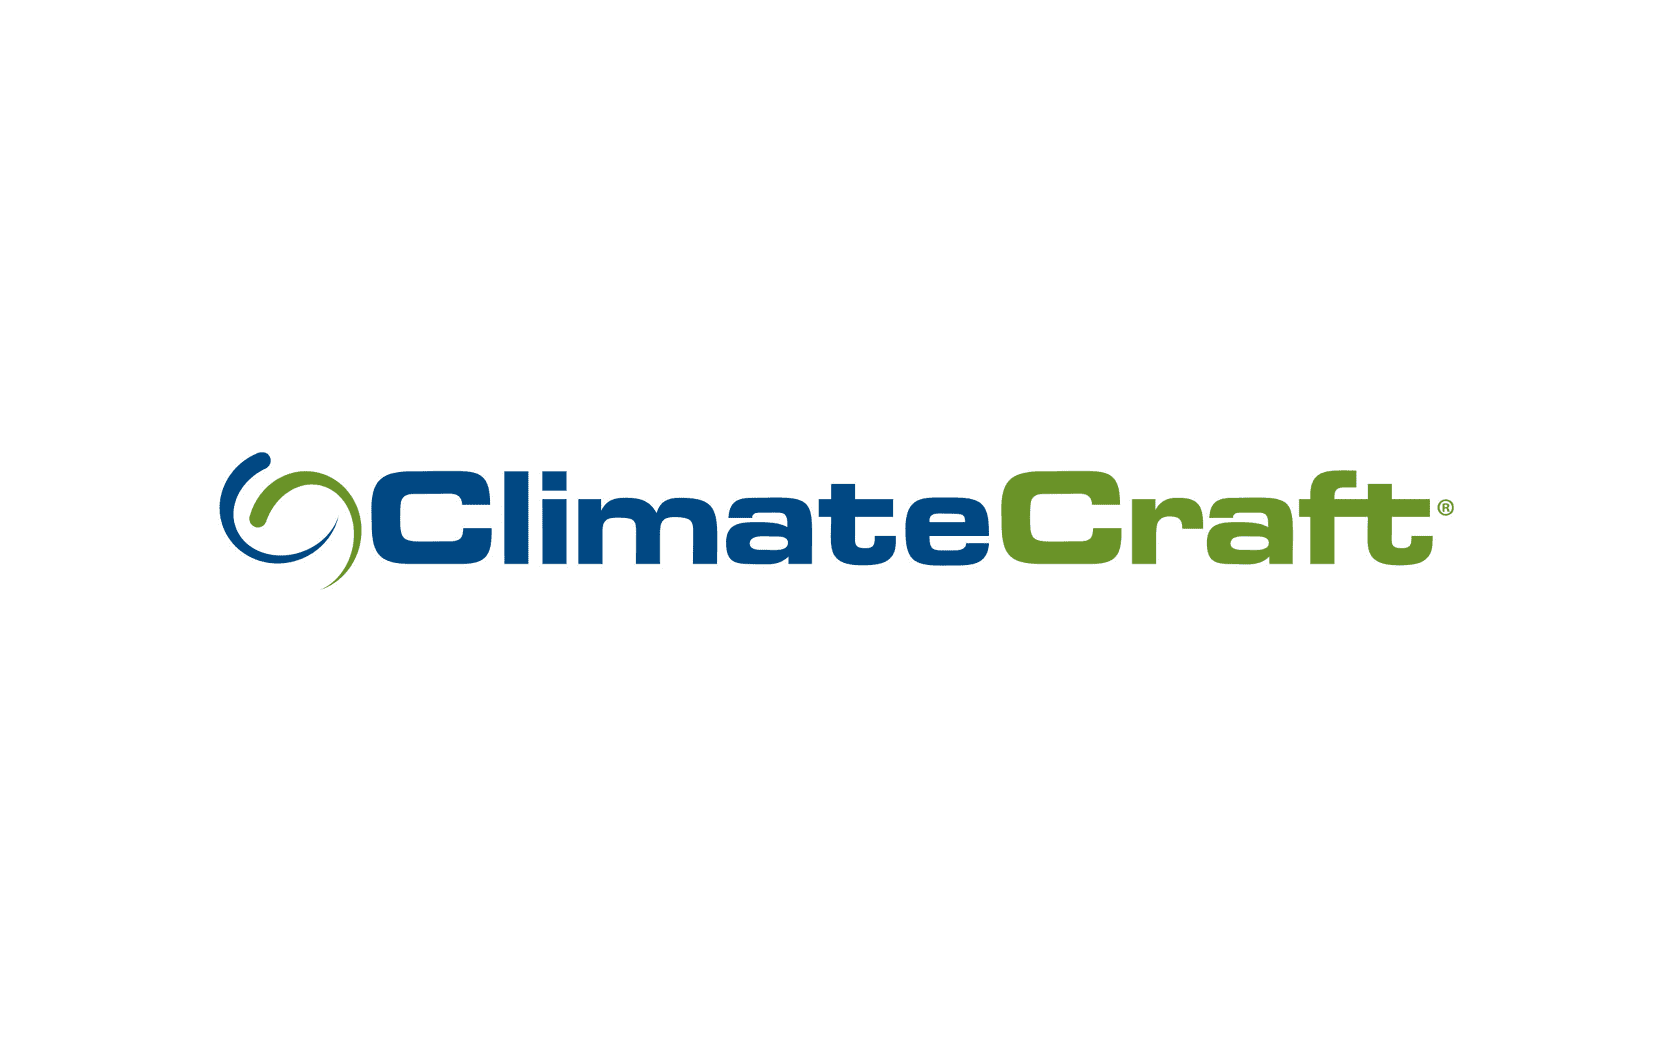 ClimateCraft